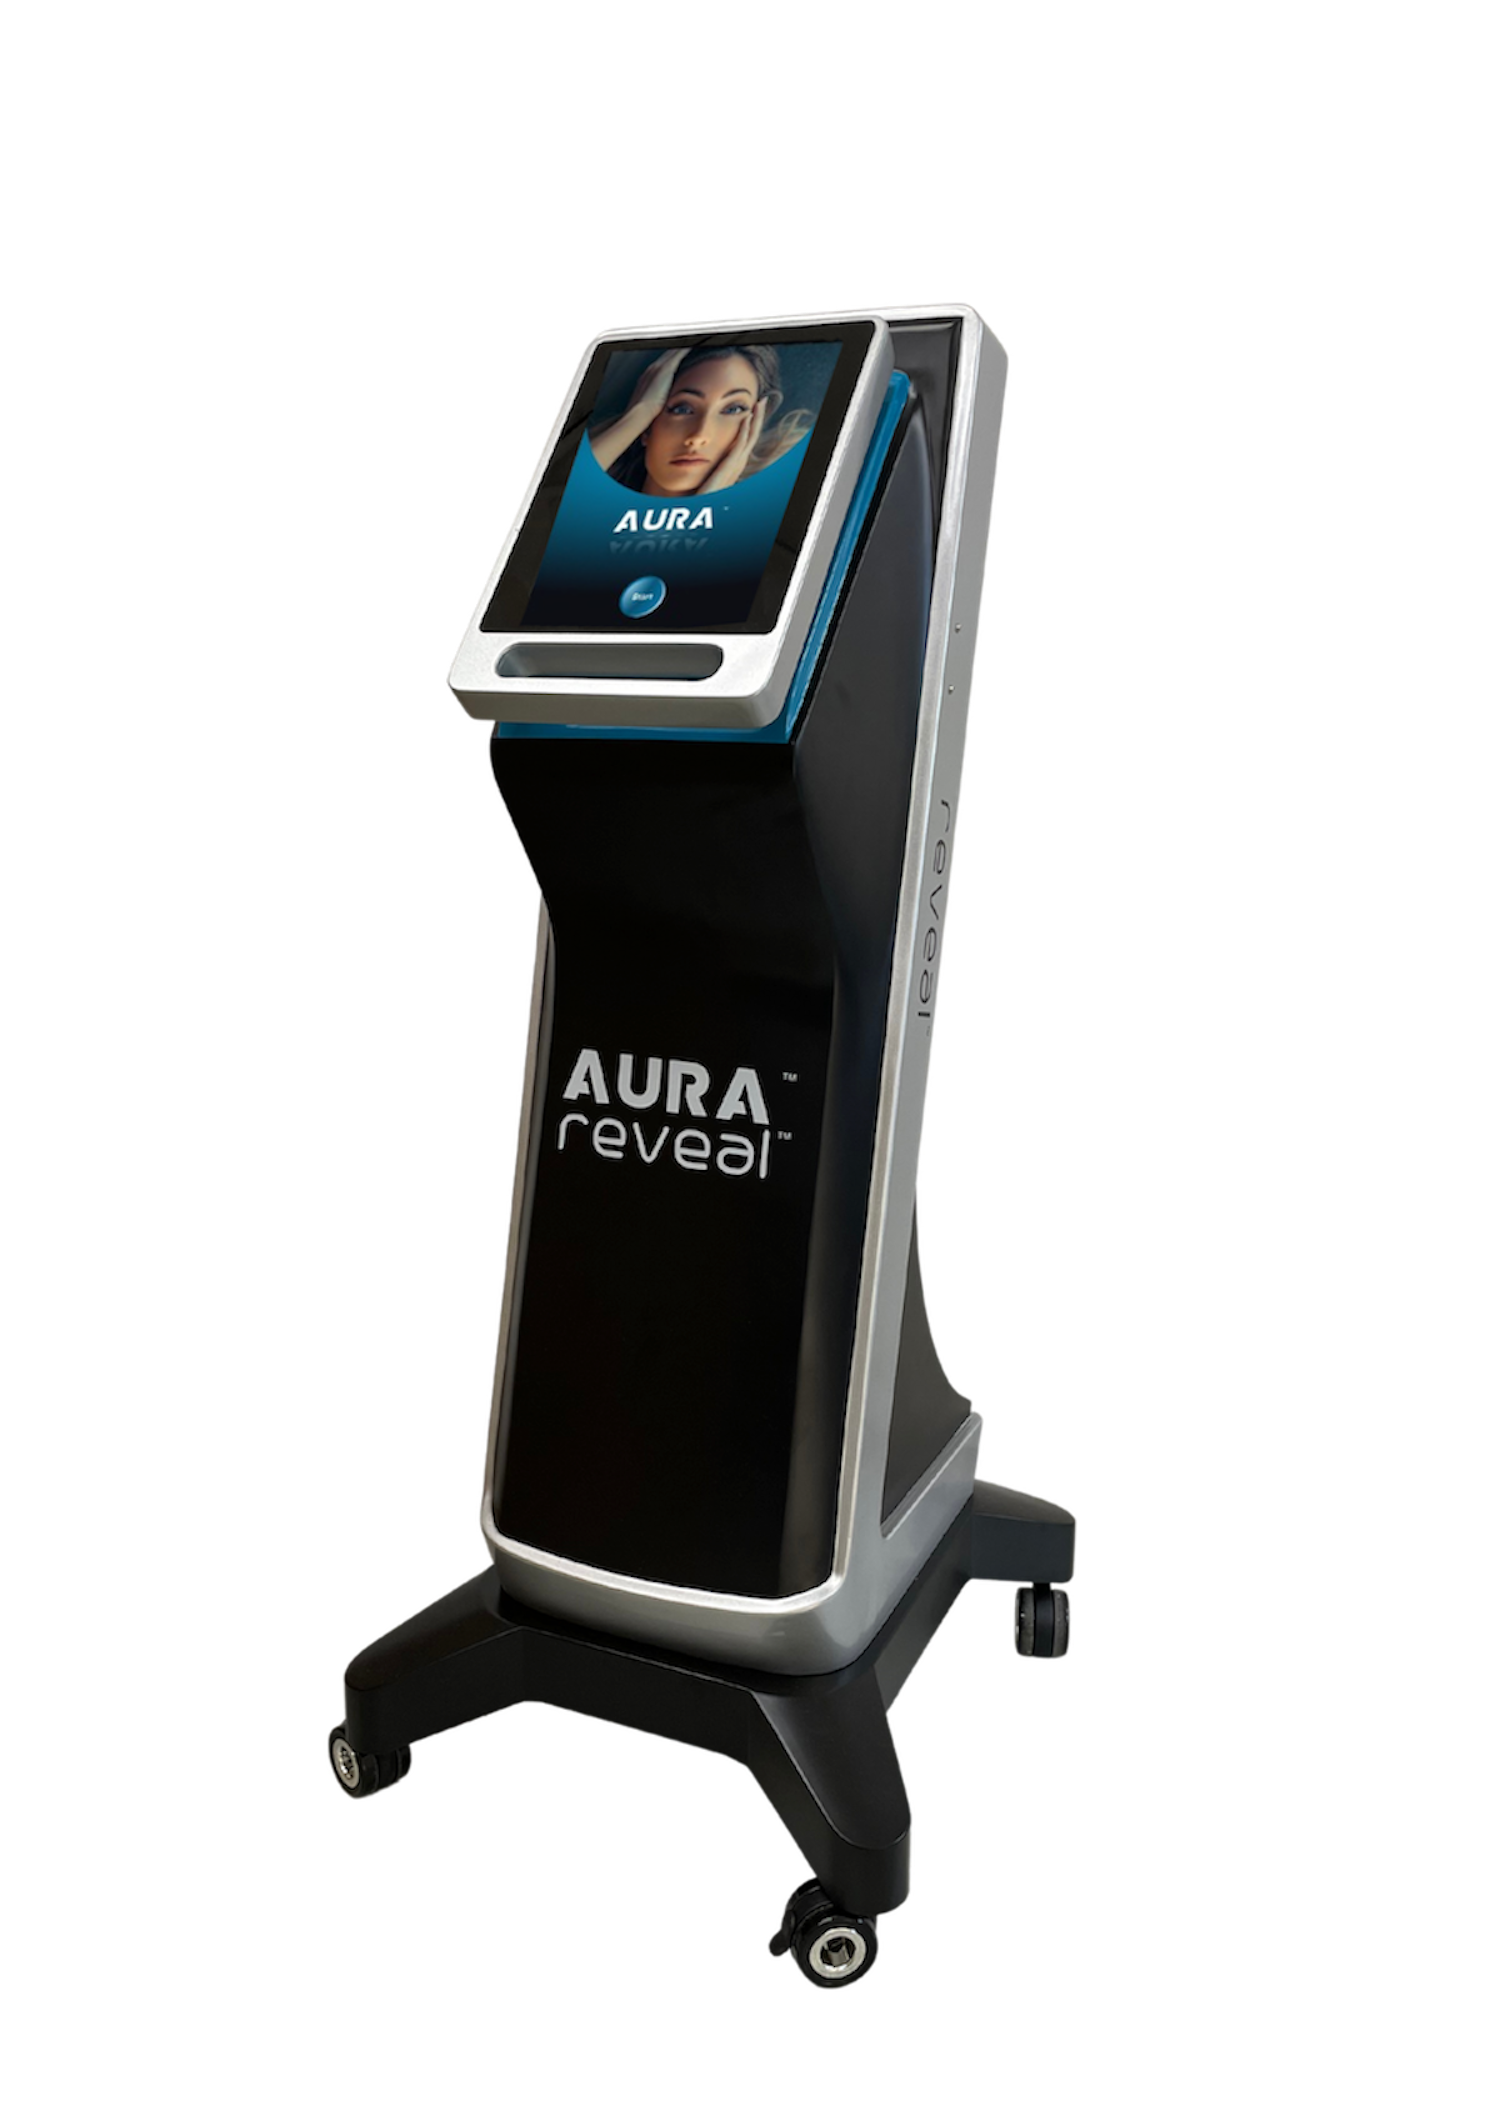 Aura device